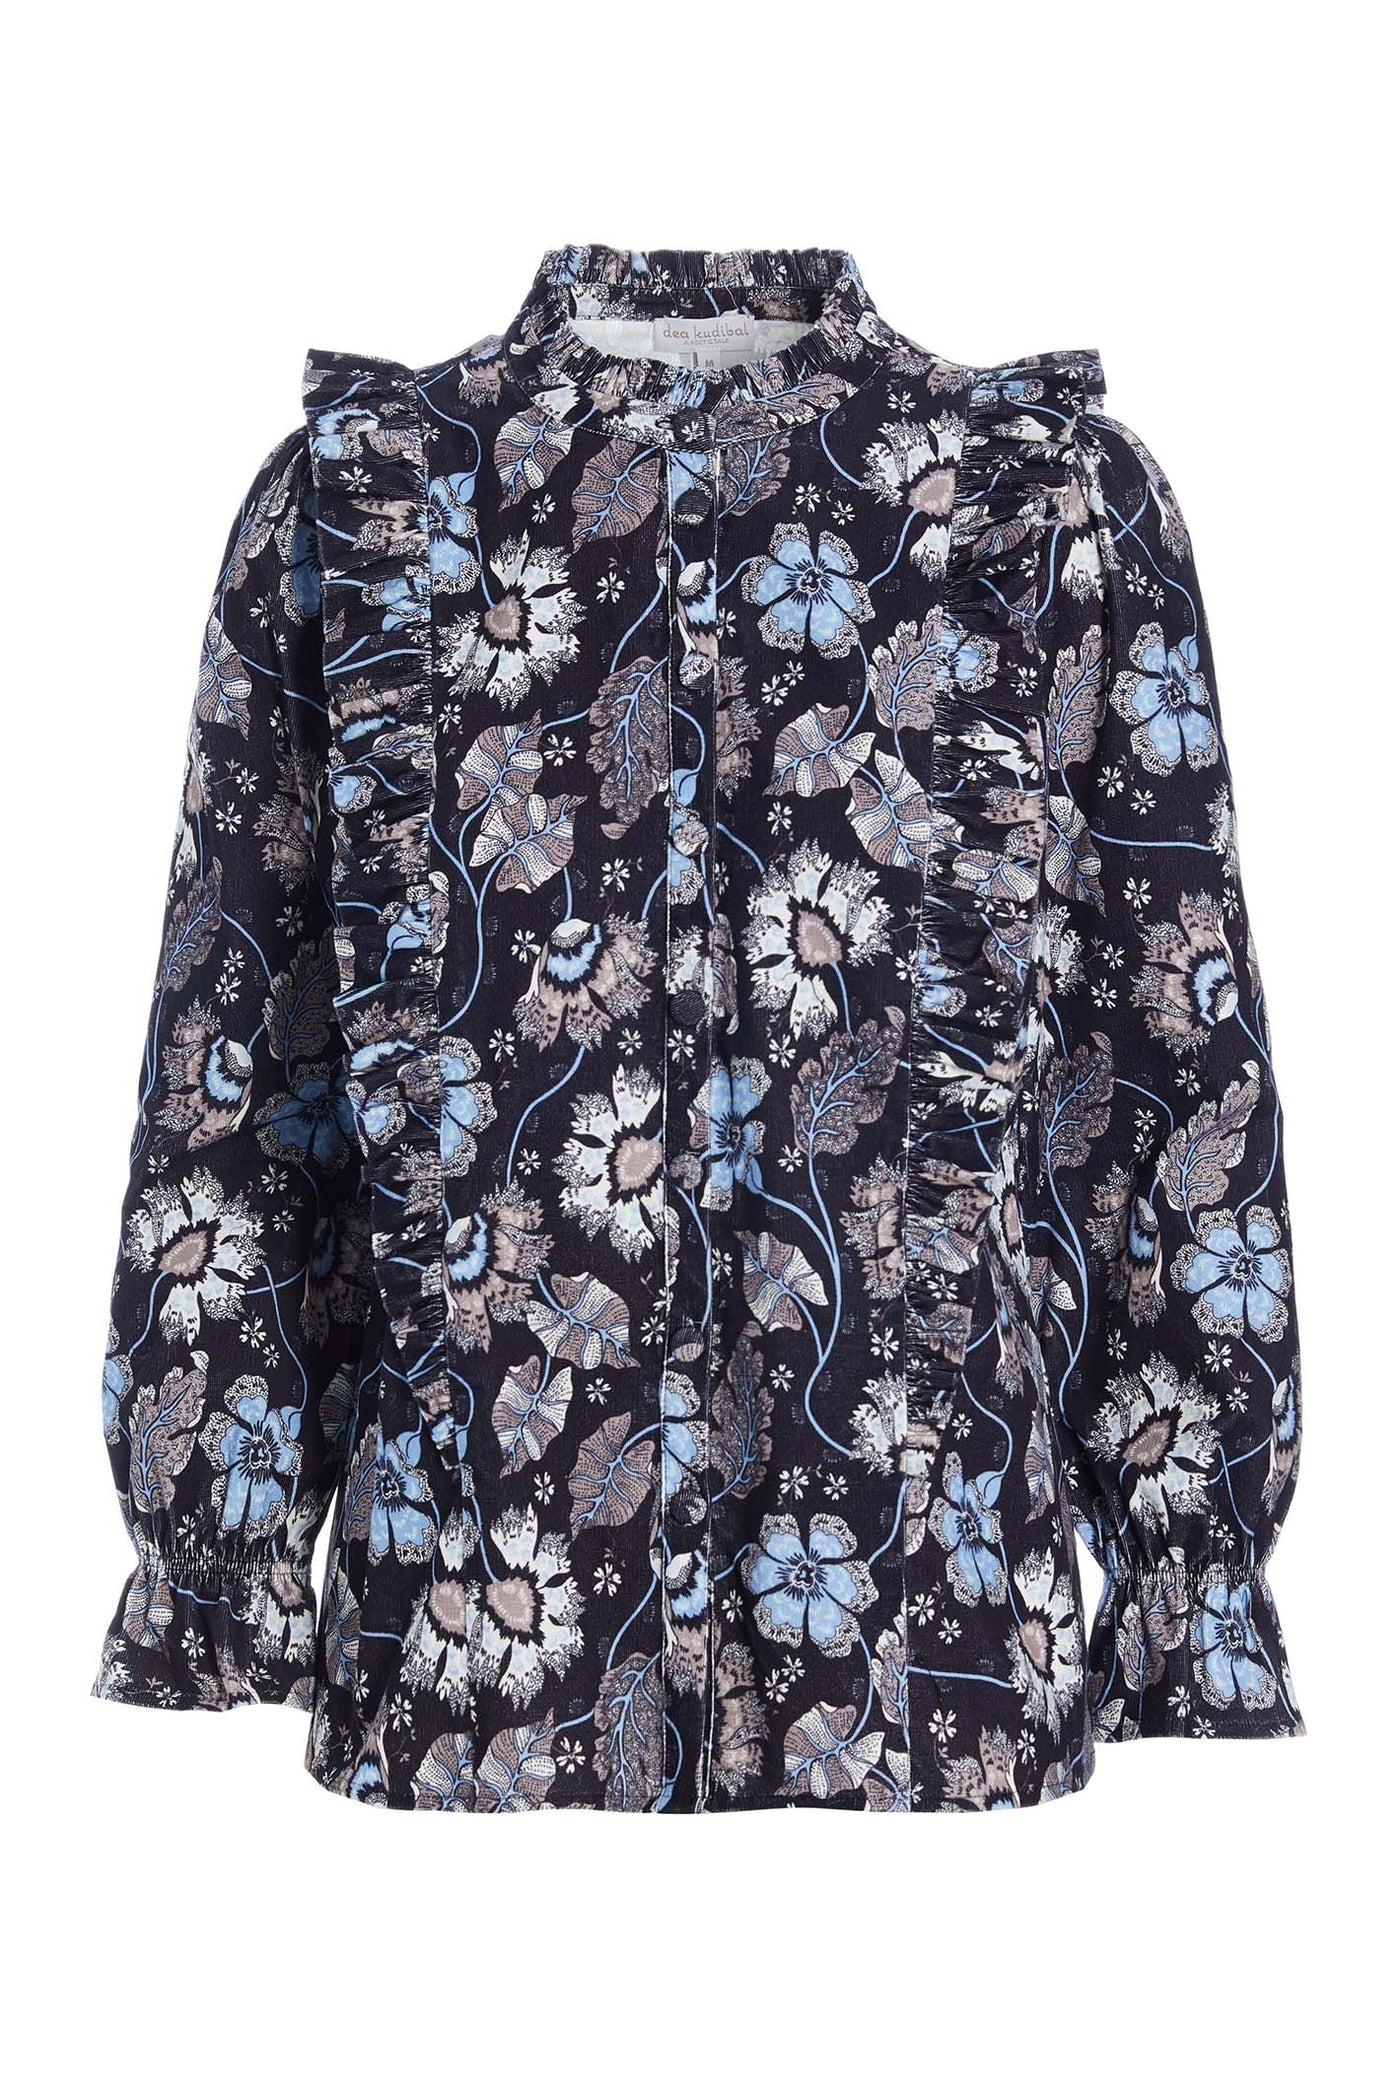 Dea Kudibal Melody Mystic Blue Floral Ruffle Shirt - Lonah Boutique